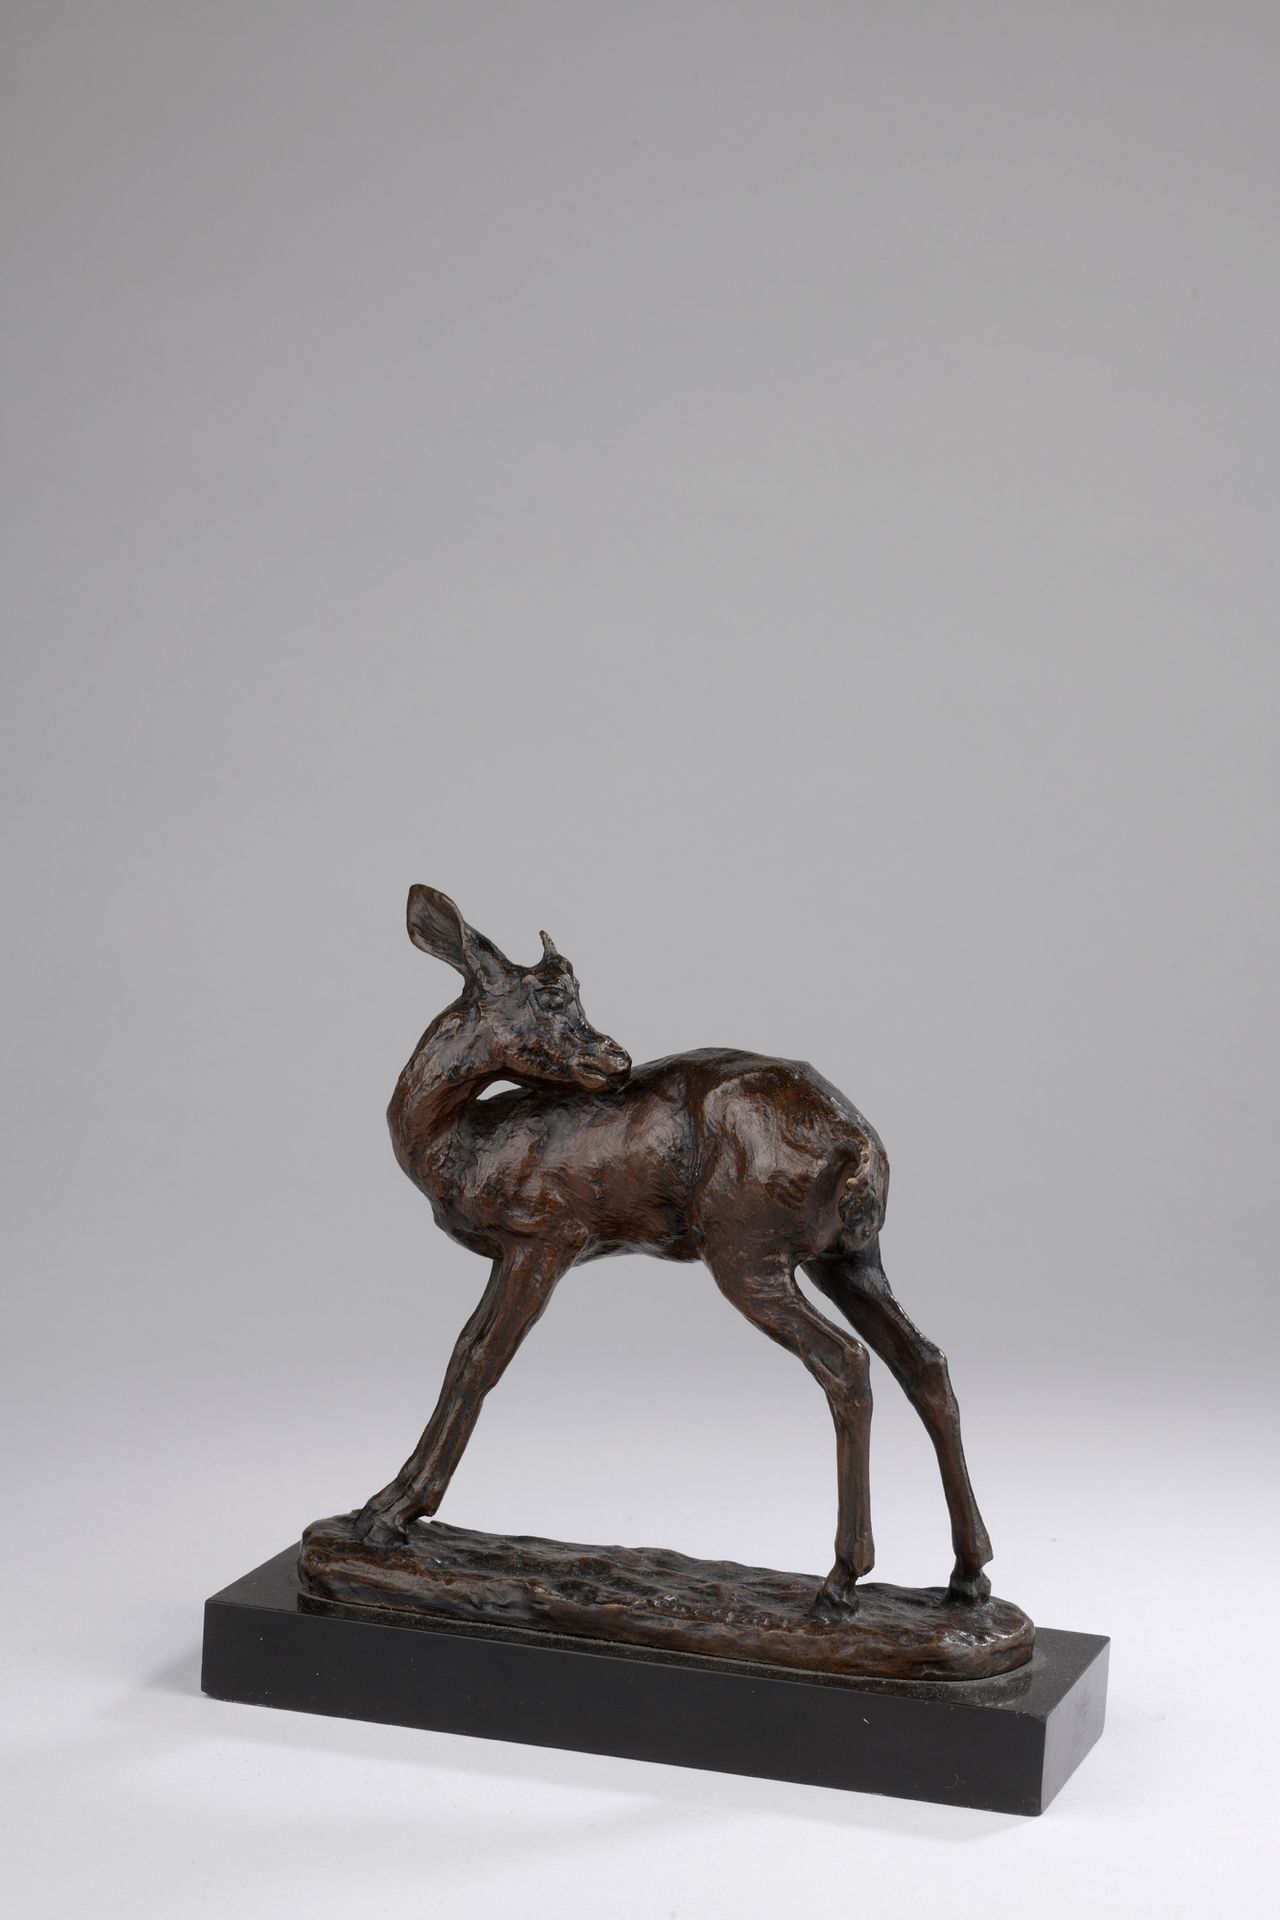 Null 勒内-巴黎 (1881-1970)

小鹿

青铜，有浅棕色的铜锈，有红色的阴影

露台上有 "René Paris "的签名

H.15厘米，露台1&hellip;